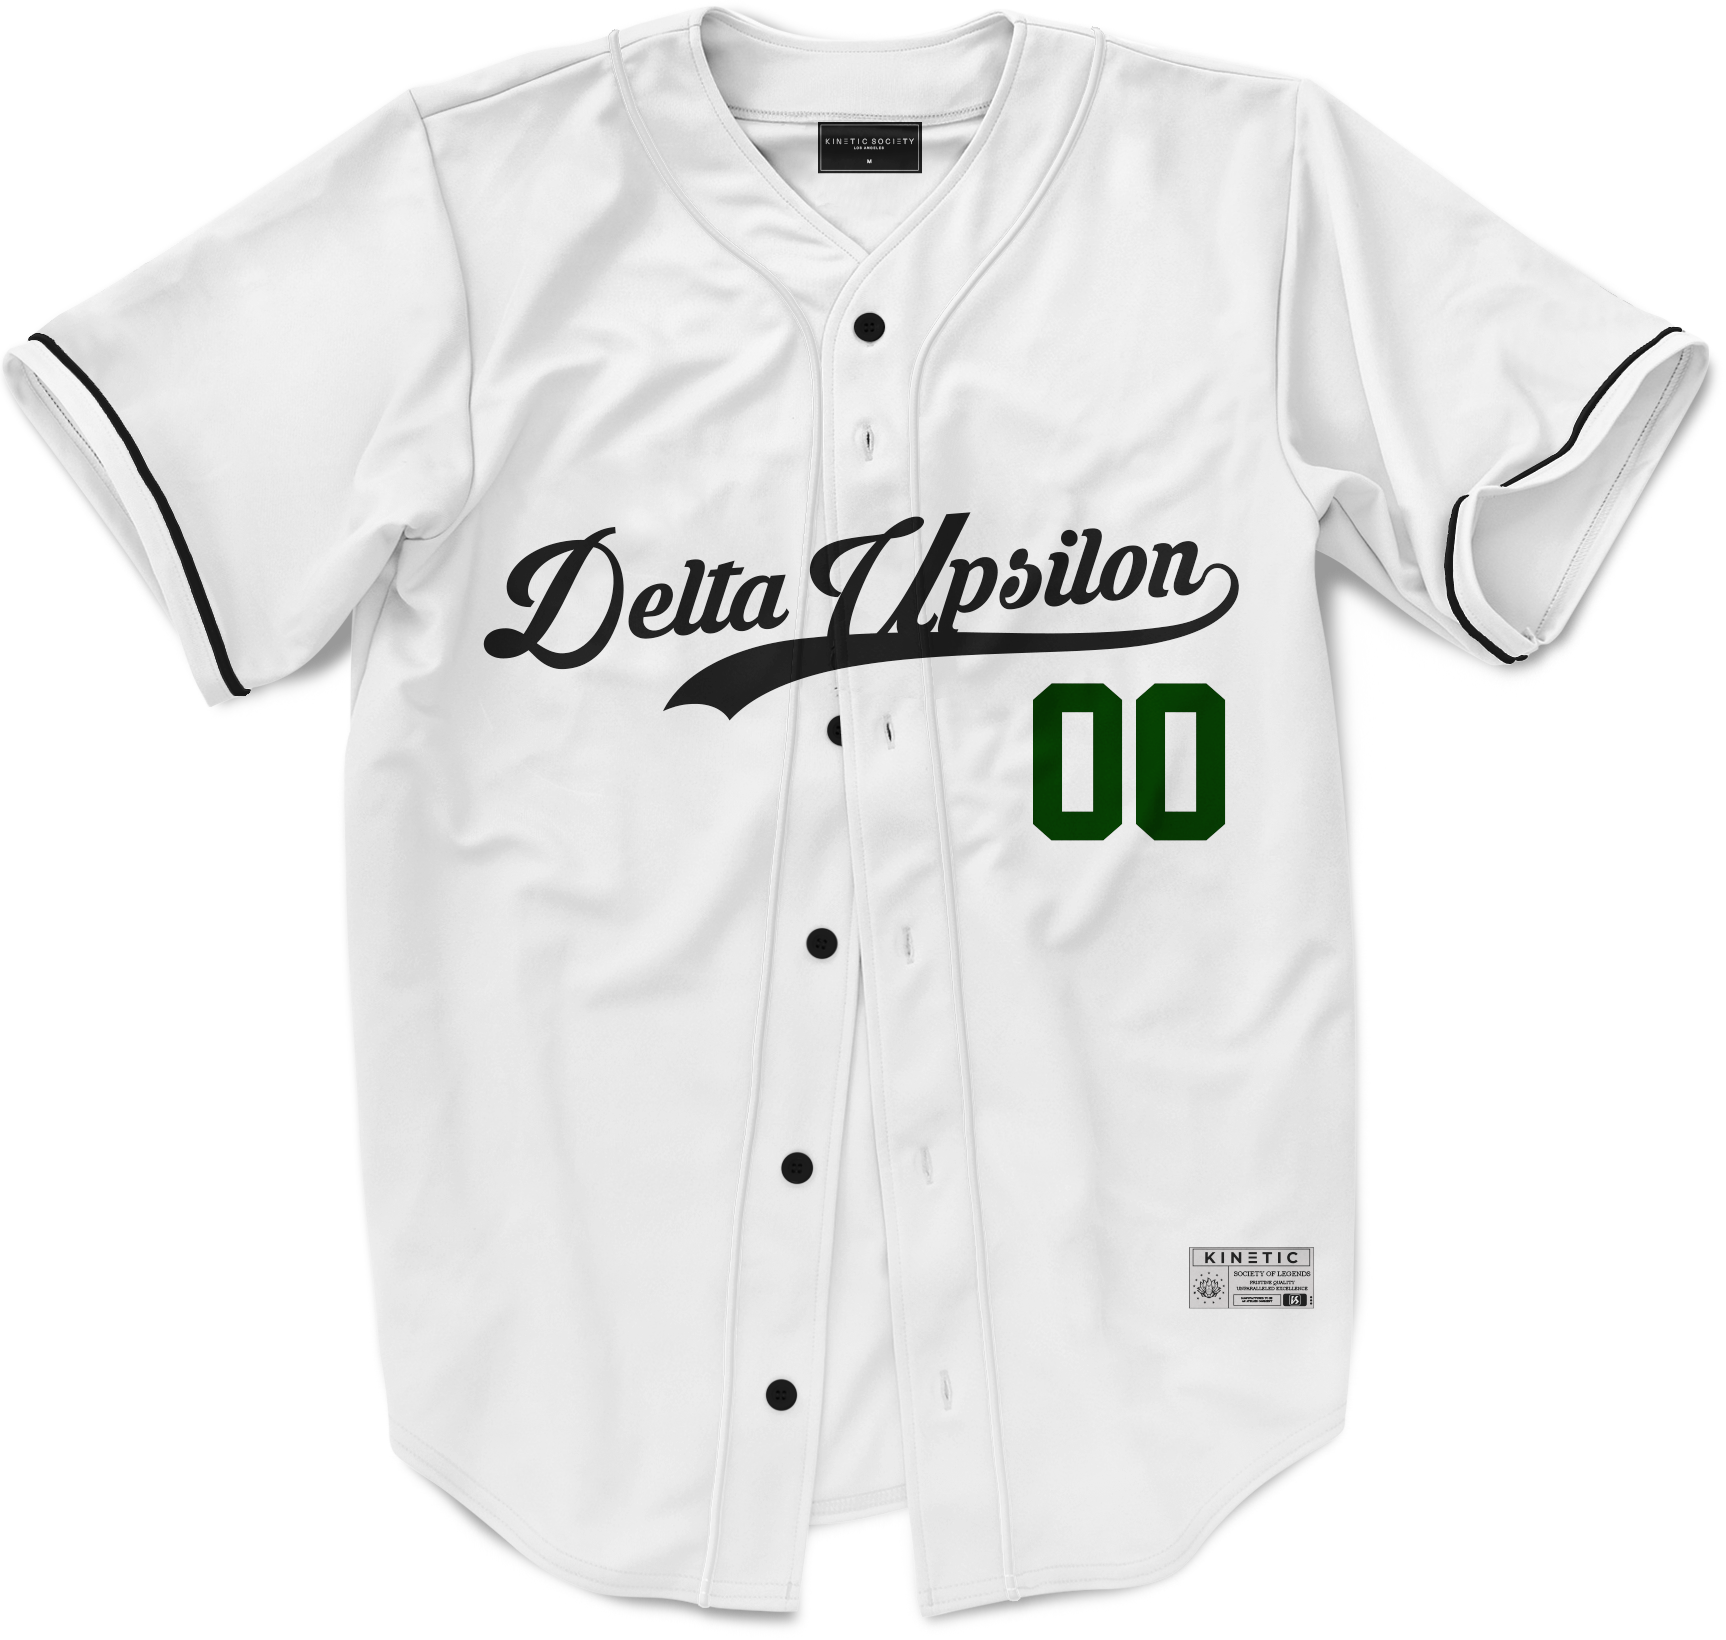 White on Black Premium Baseball Jersey | Customizable